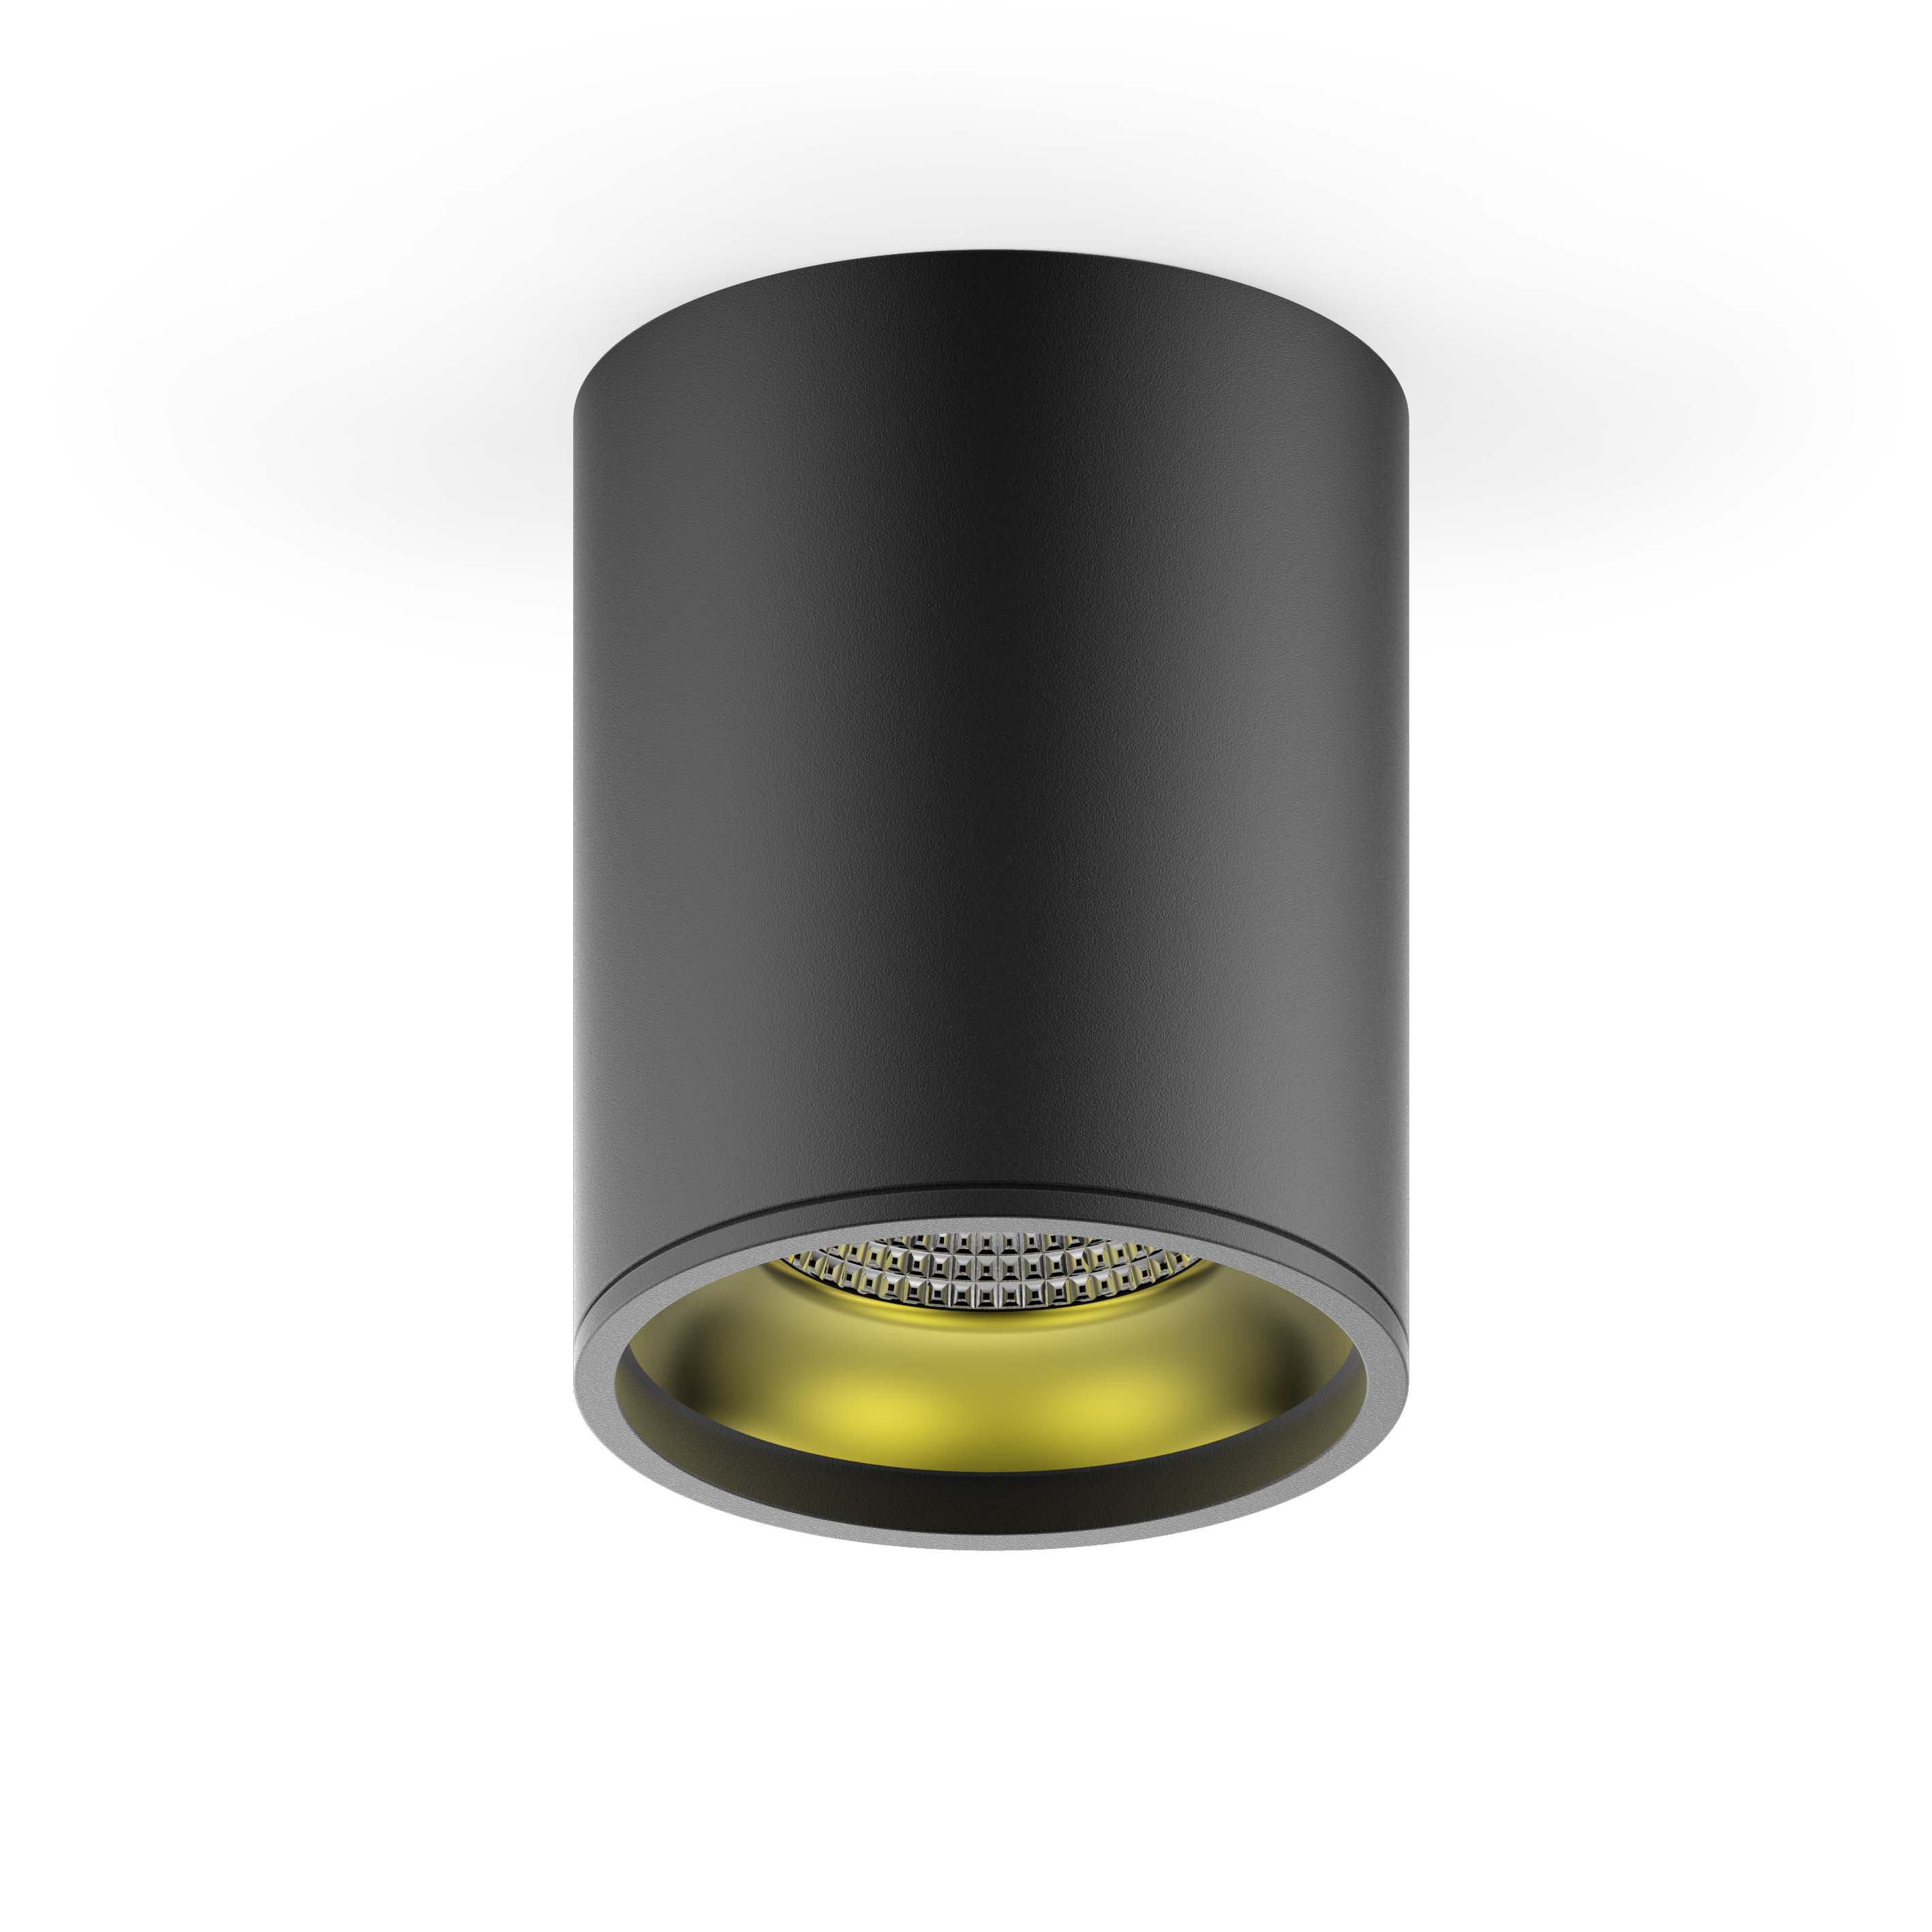 LED светильник накладной HD008 12W (черный золото) 3000K 79x100,900лм, 1/10 светильник линд размер 78x51x8 см 80вт led 3000k